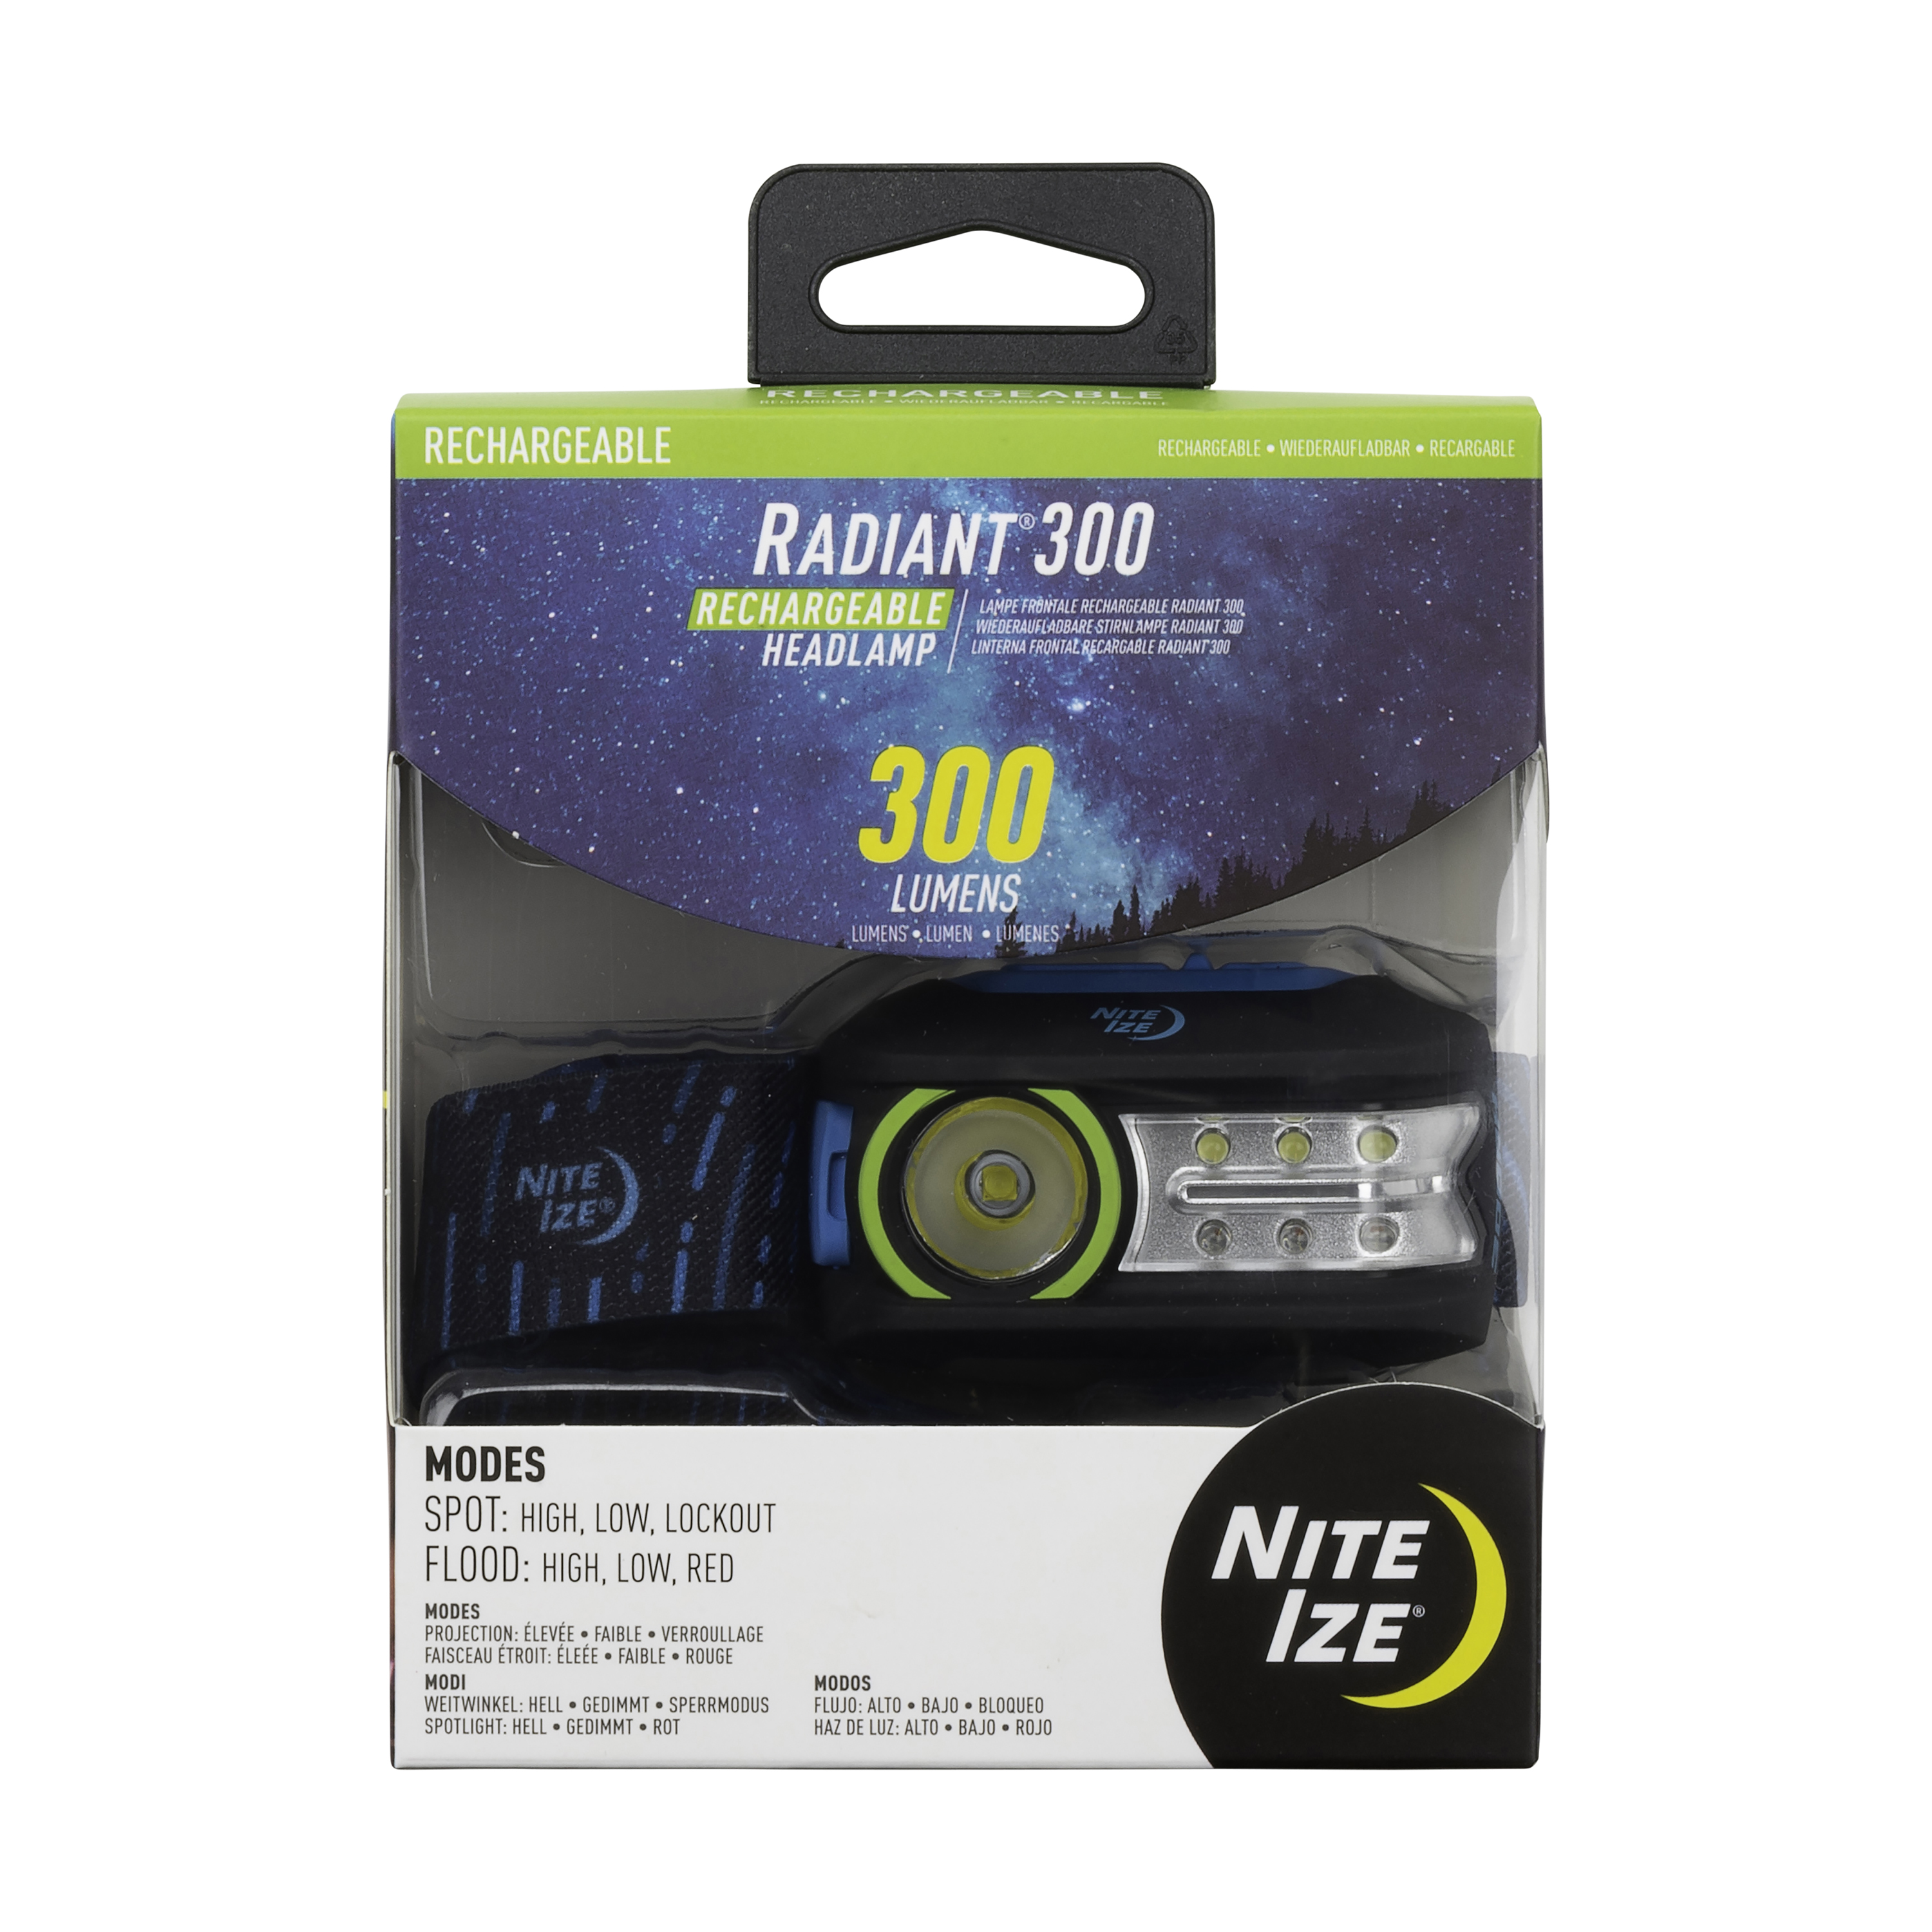 Nite Ize Radiant® 300 Rechargeable Headlamp - Blue - image 2 of 8